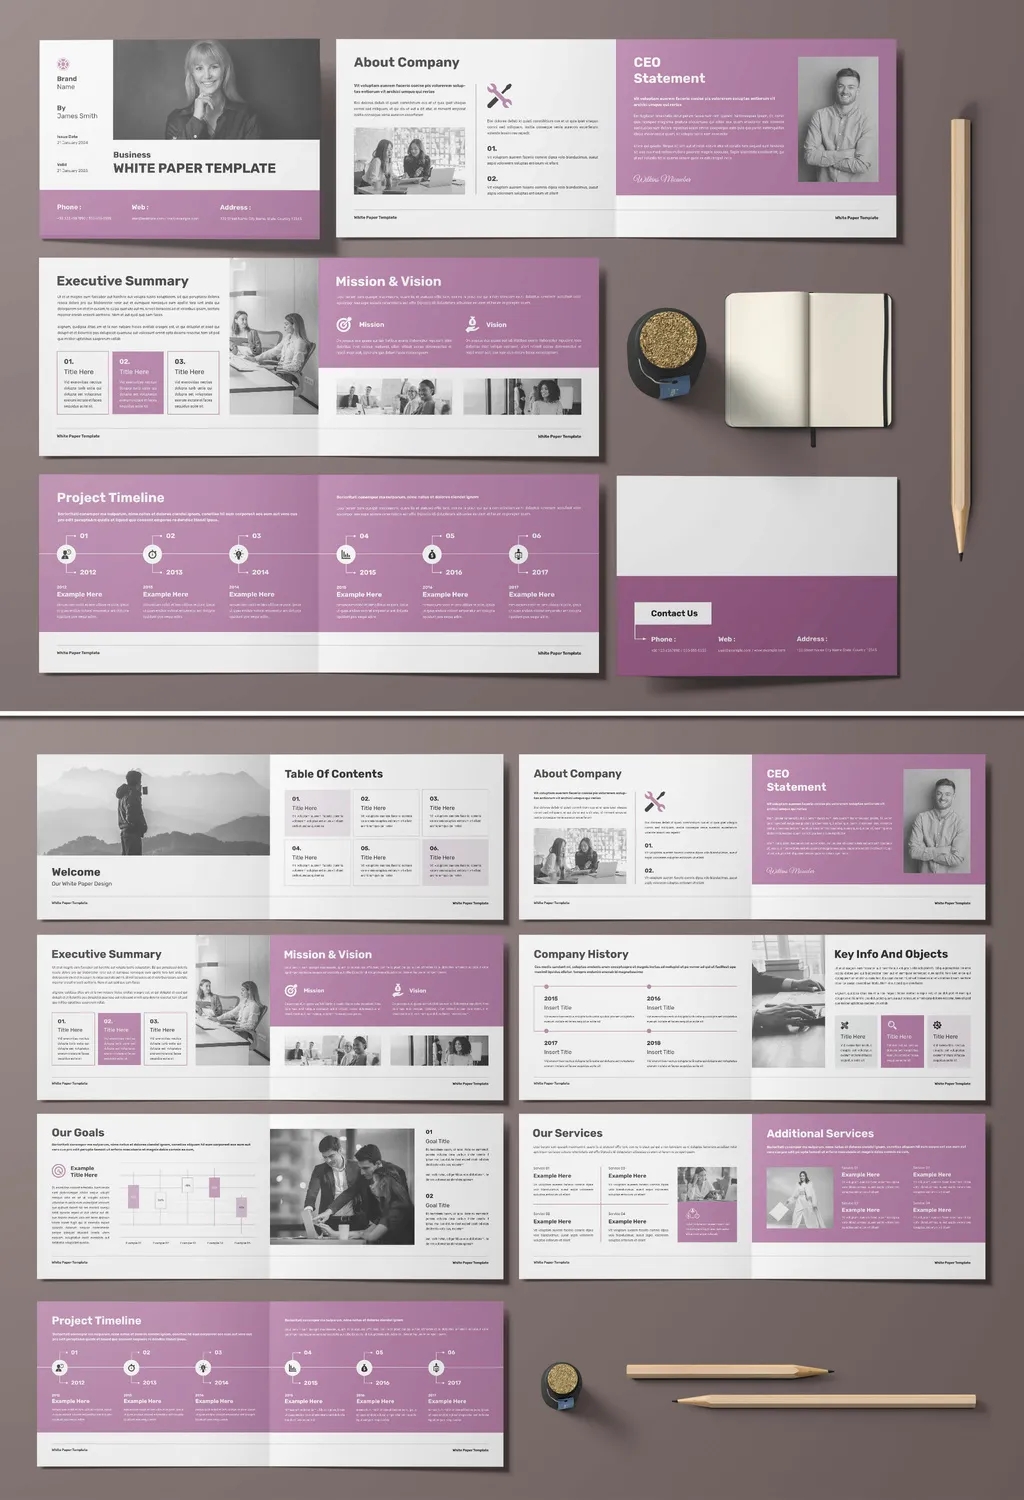 Adobestock - White Paper Template Brochure Design Layout Landscape 716694150